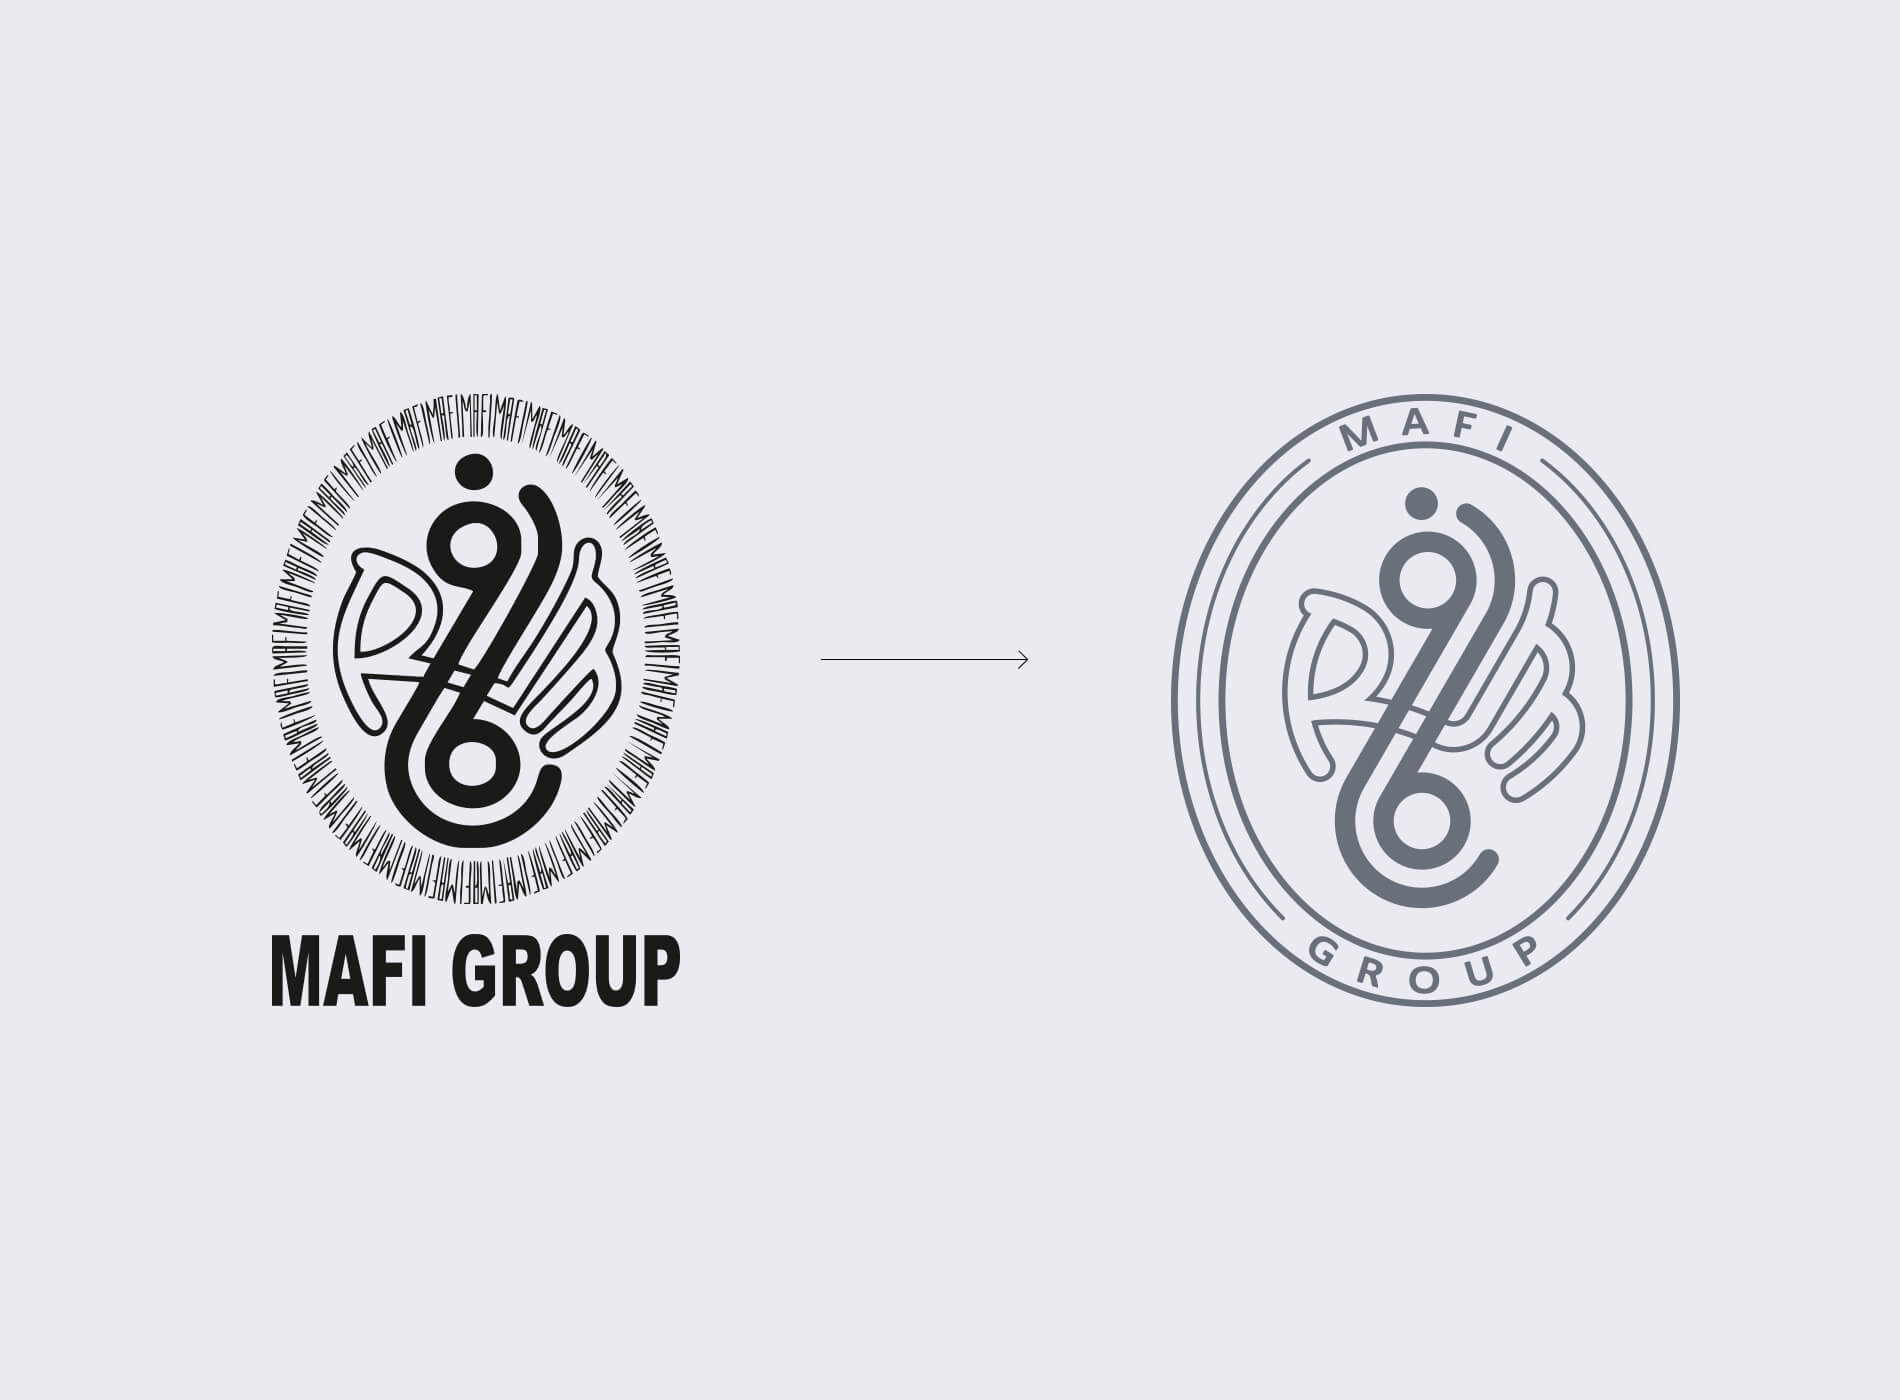 SWG Steuerberatung Mafigroup Logo Grafikdesign